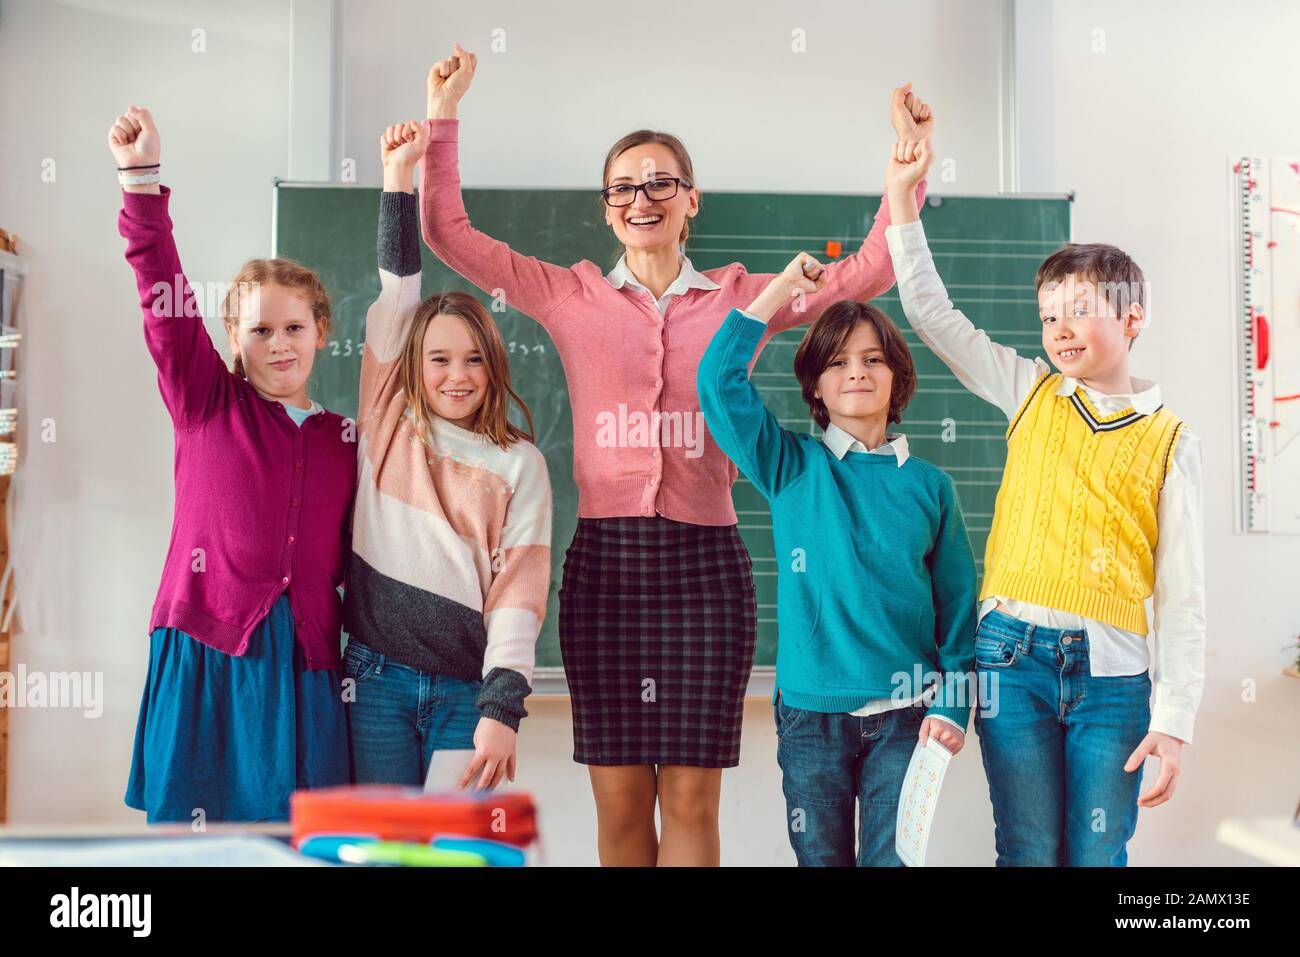 Students and teacher having fun in school Stock Photo